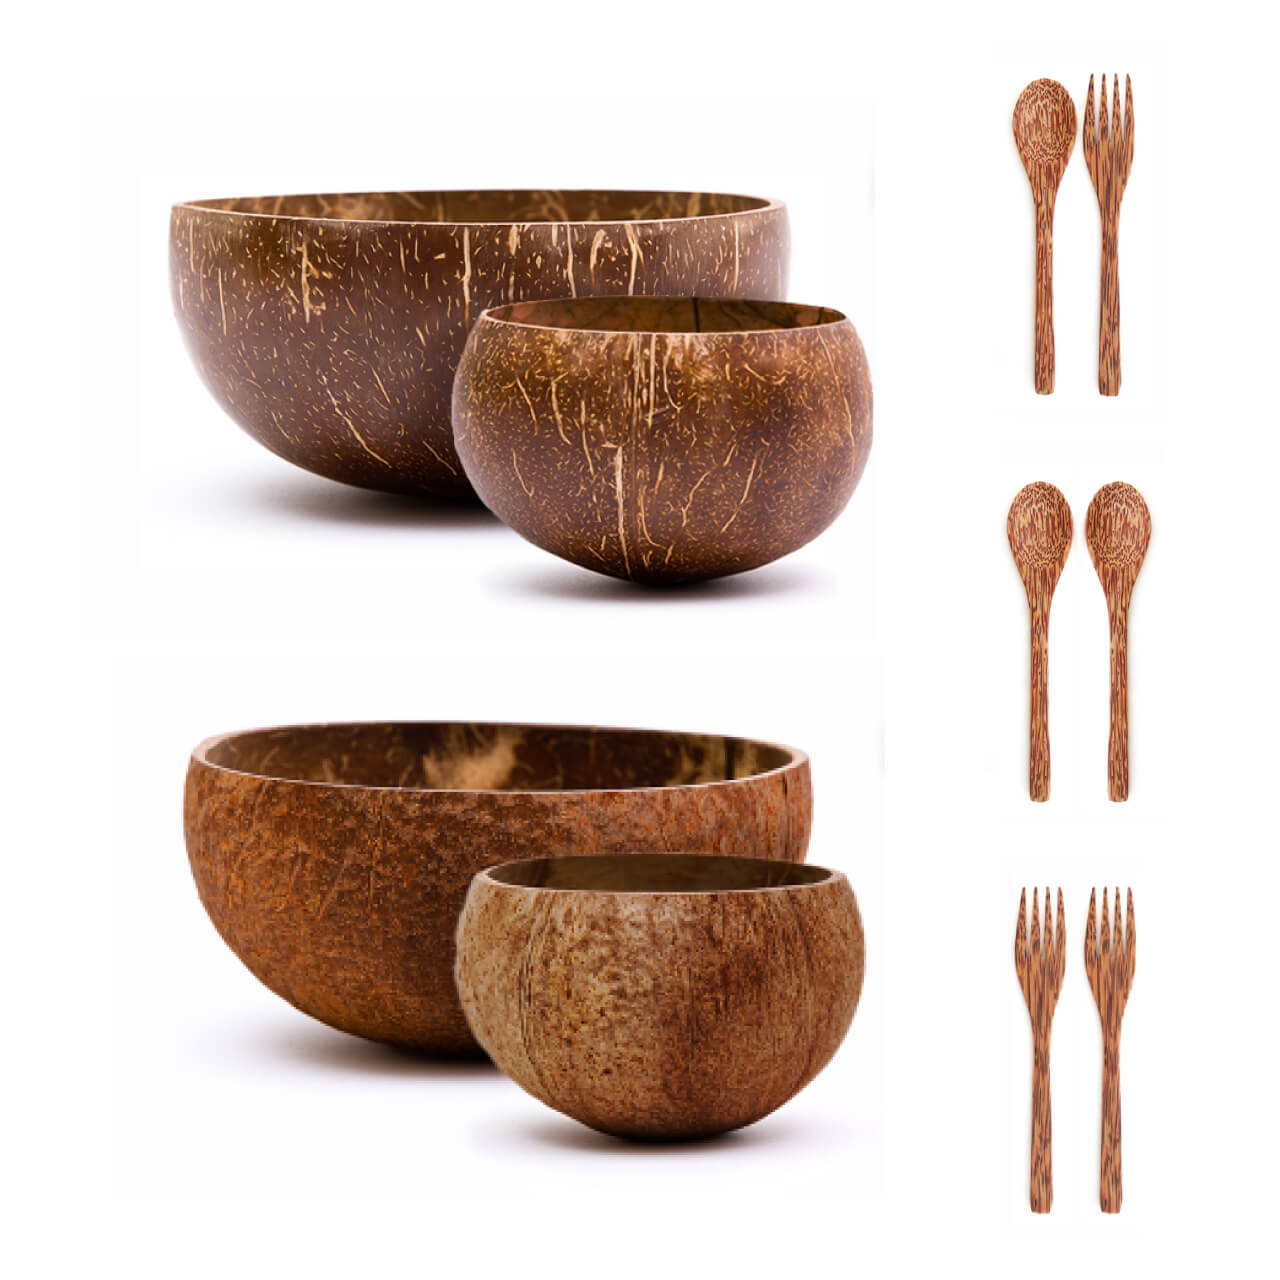 Jumbo & Small Coconut Bowls Set w/ Wooden Utensils